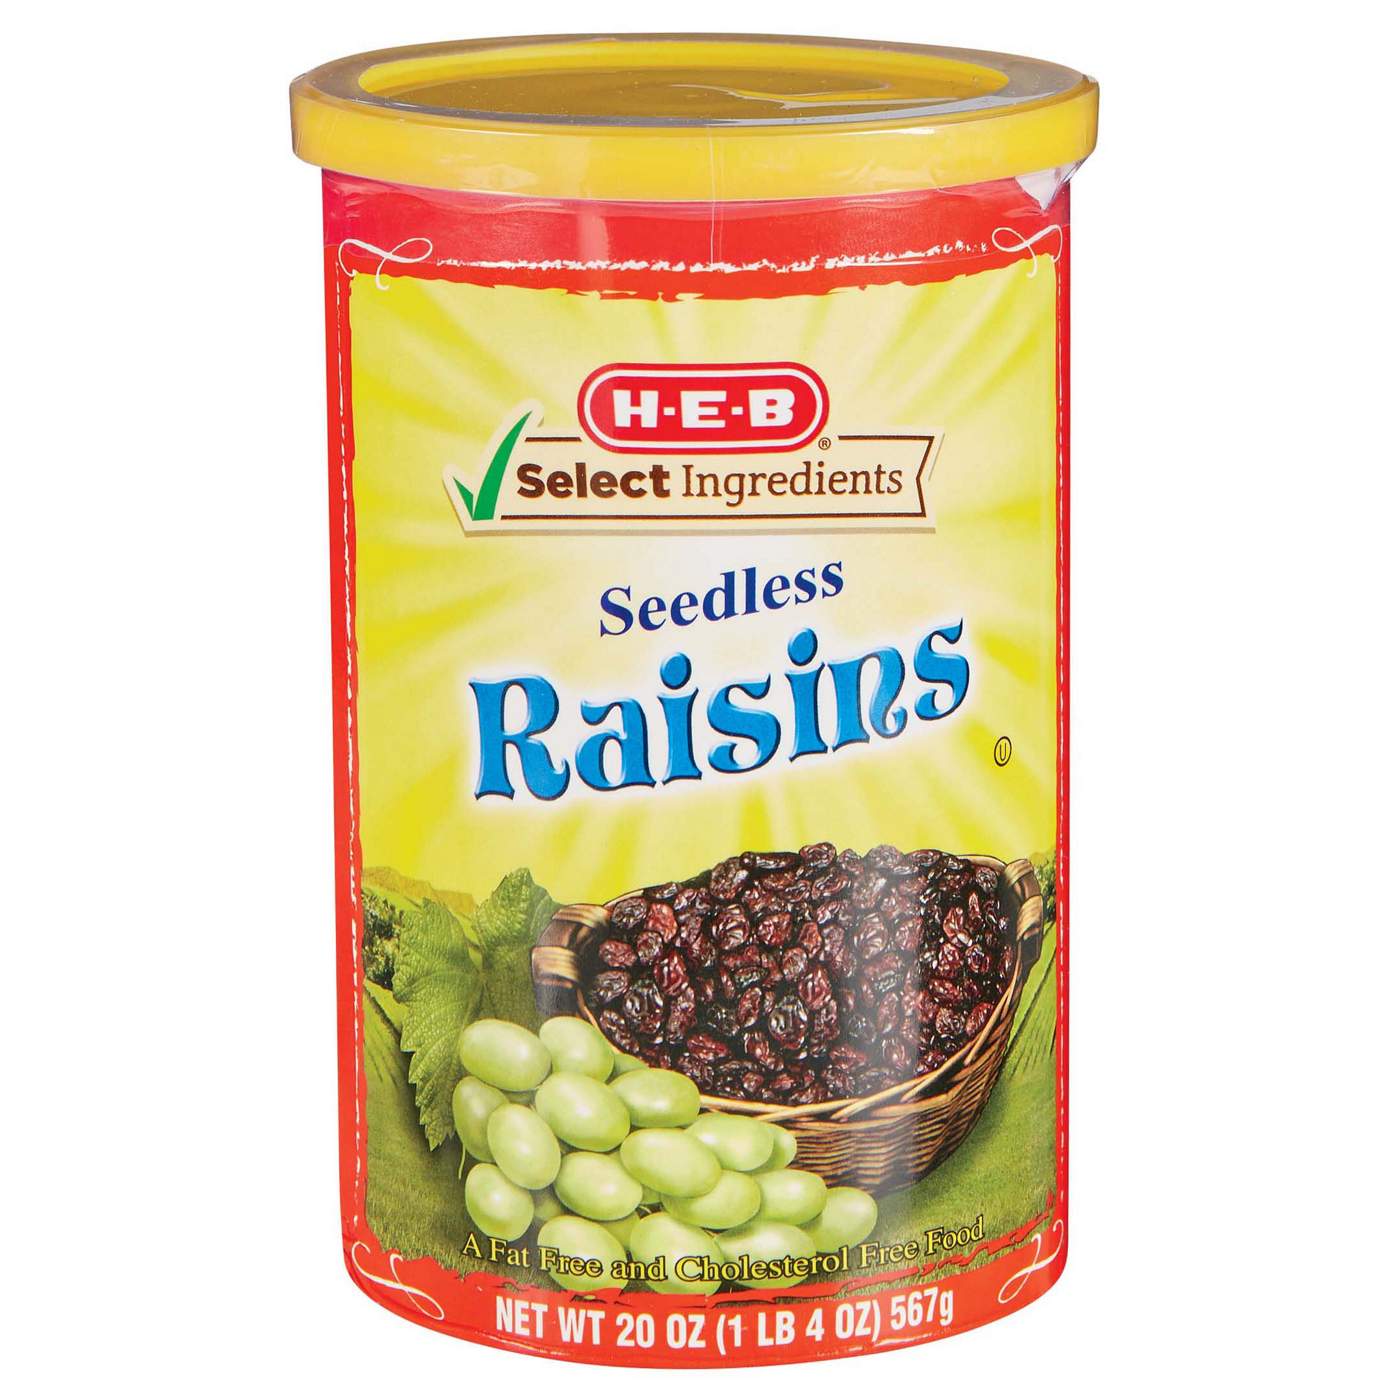 H-E-B Seedless Raisins; image 1 of 2